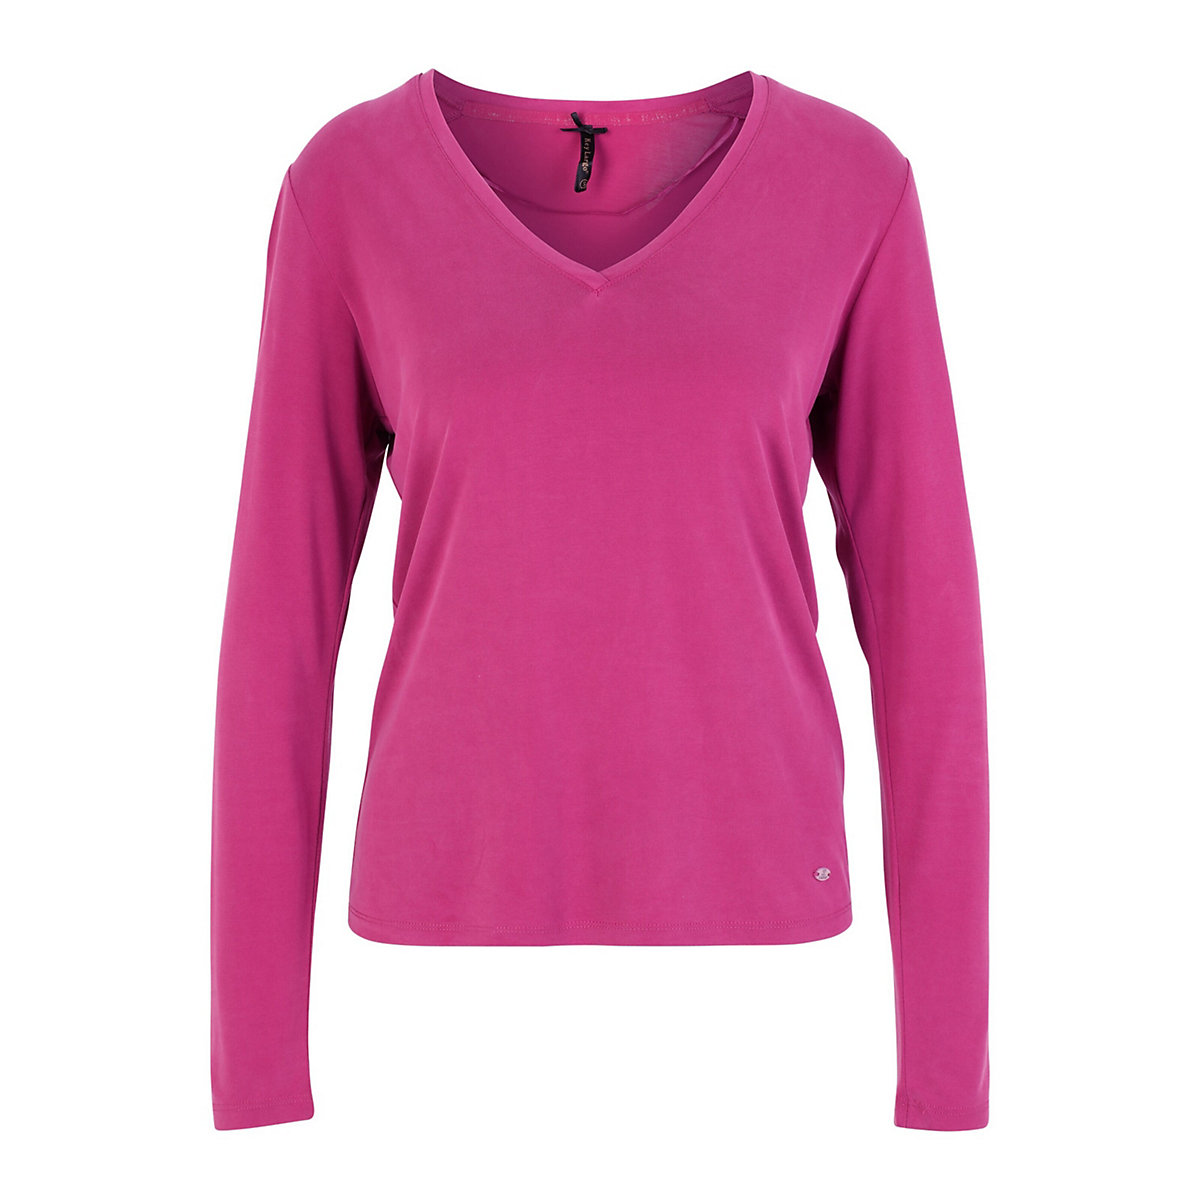 KEY LARGO Shirt Tara pink